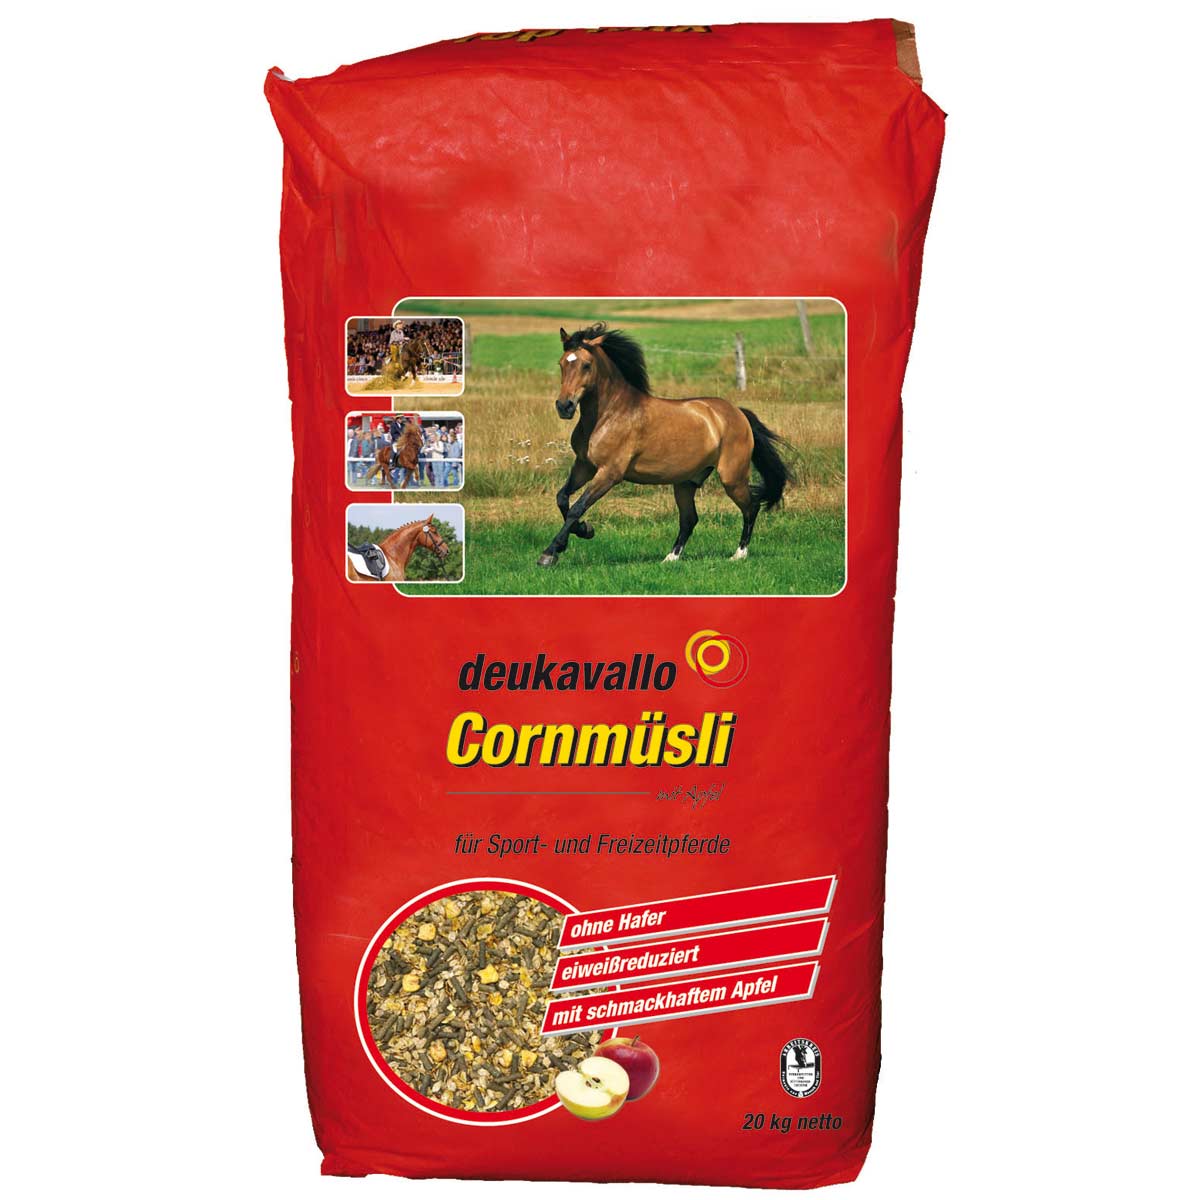 Deukavallo Corn-Muesli horse feed with apple & herbs 20 kg